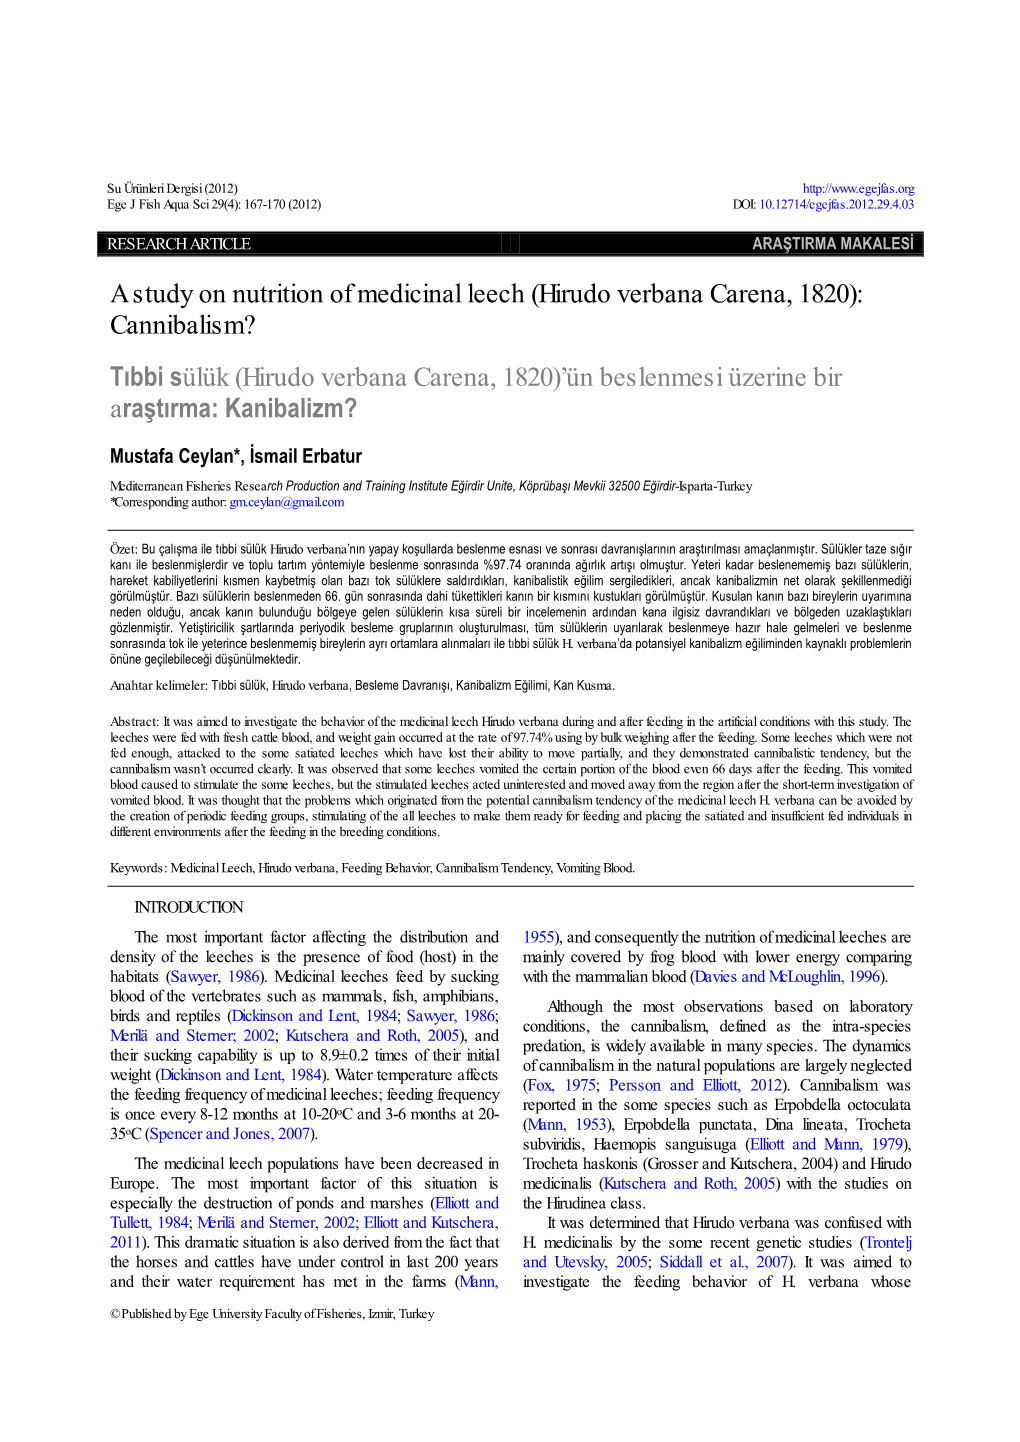 A Study on Nutrition of Medicinal Leech